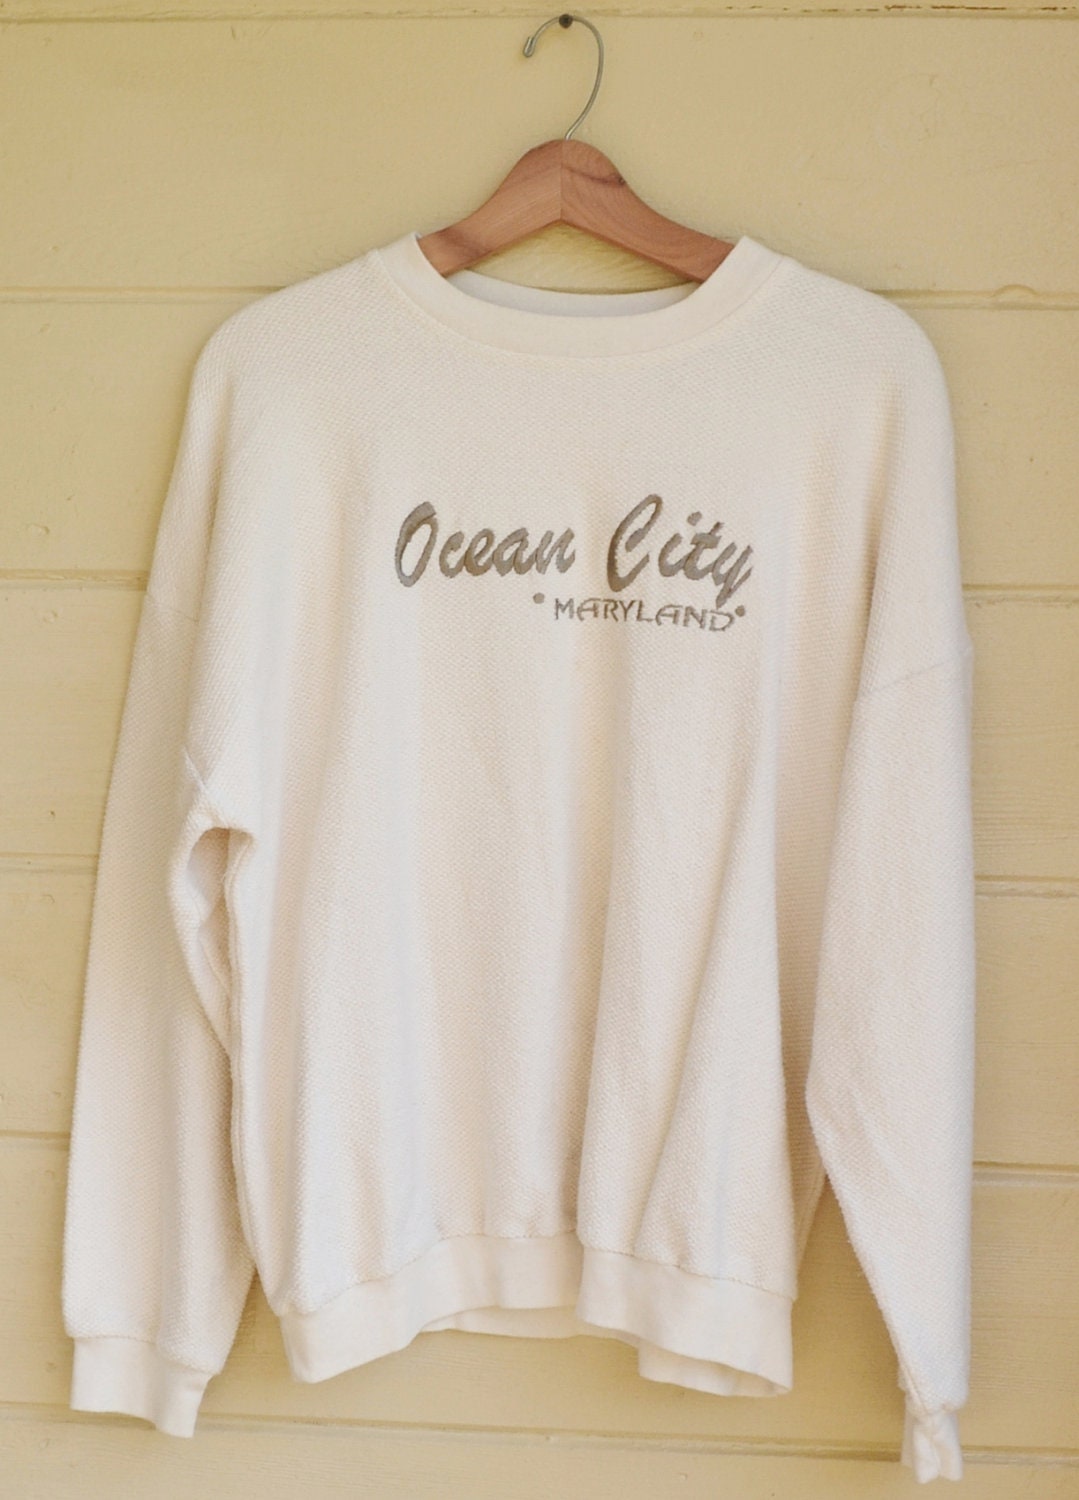 Vintage Pull Over Shirt Ocean City Maryland Shirt